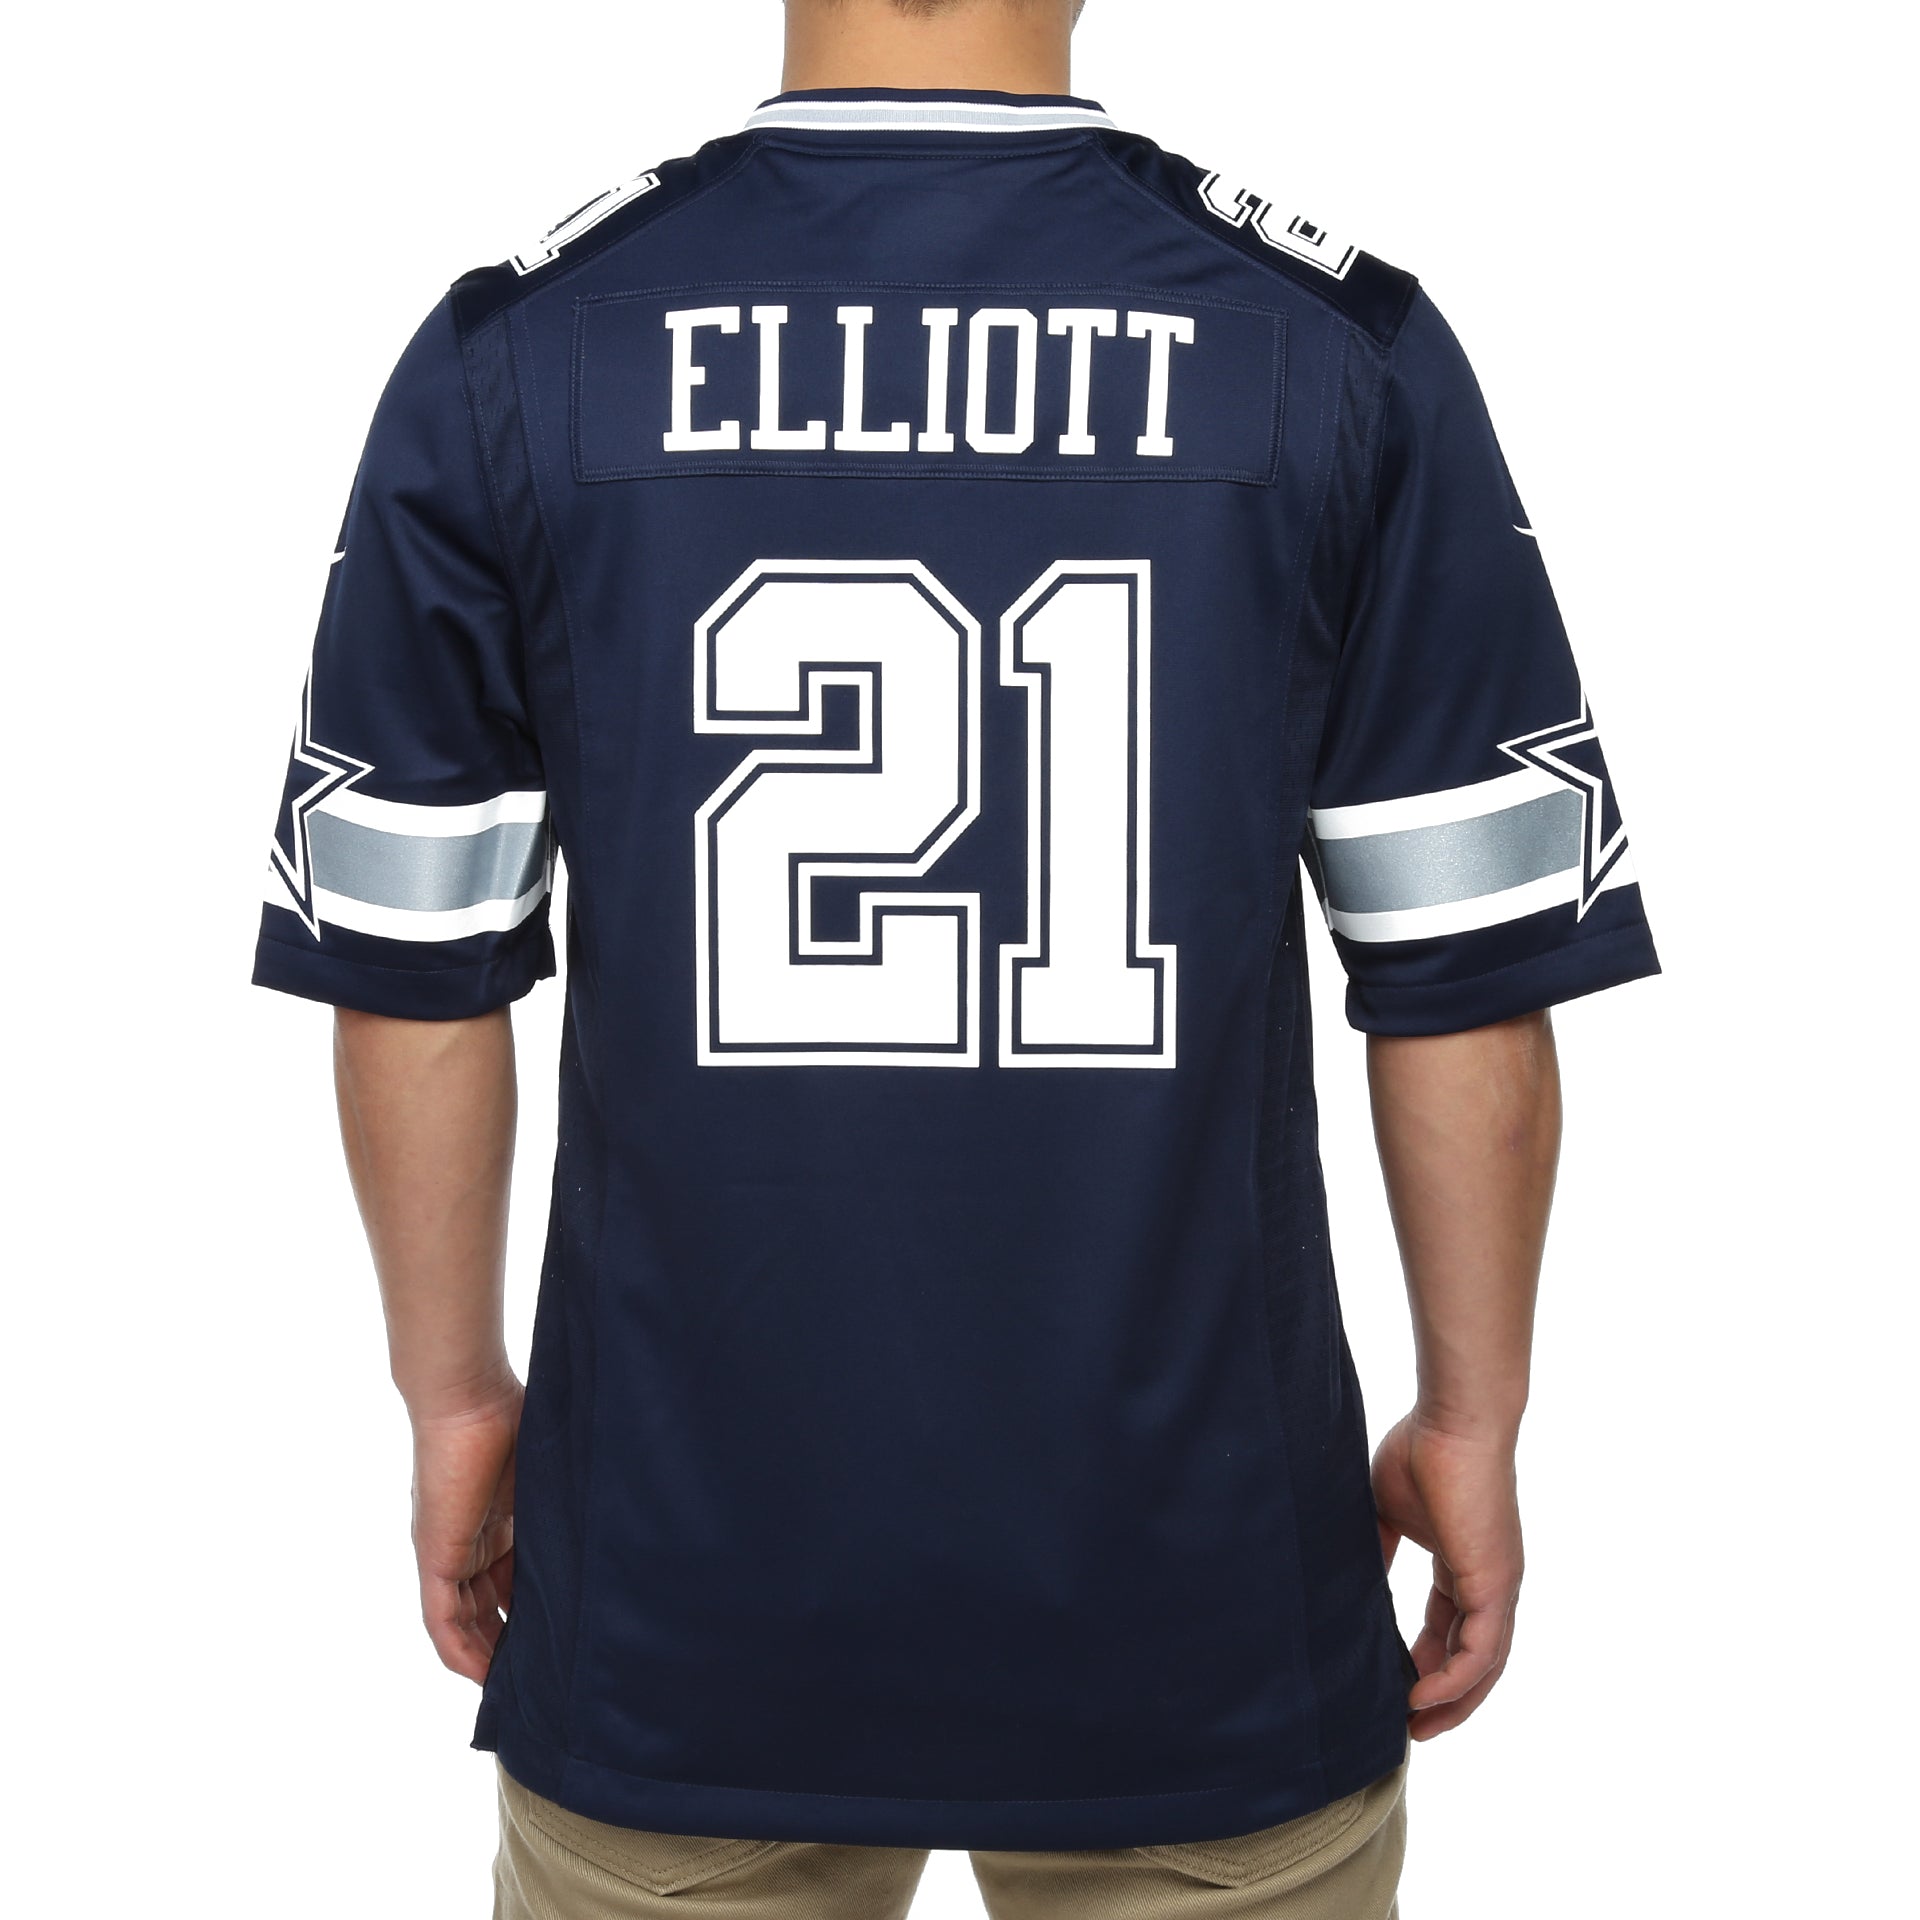 Dallas Cowboys x Nike Ezekiel Elliott #21 Game Replica Jersey - Navy - New  Star